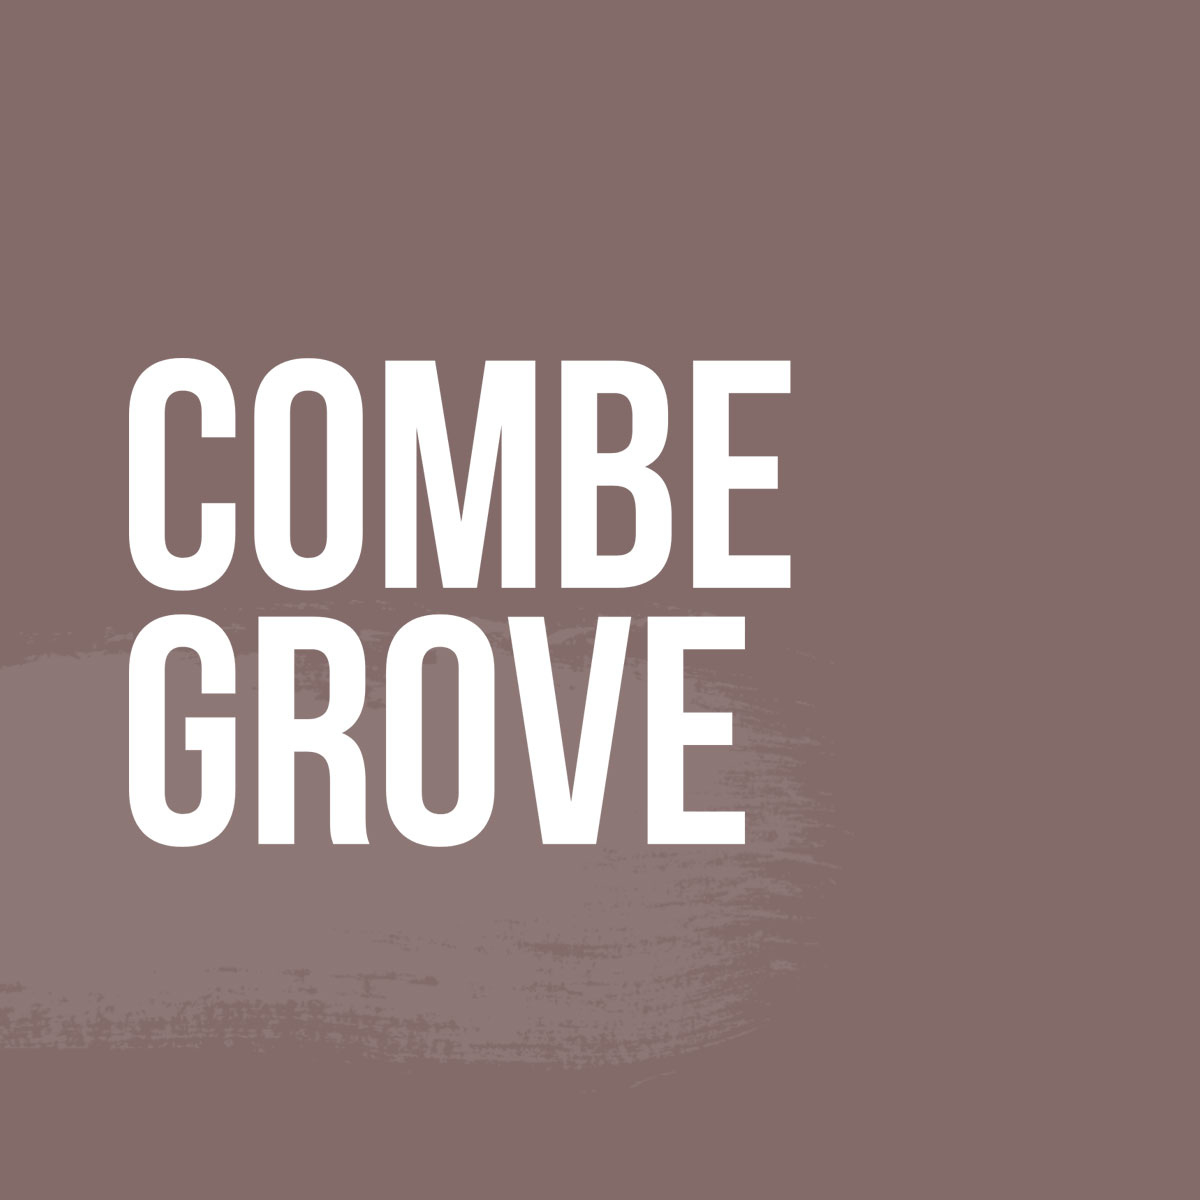 Events For November 2021 - Combe Grove, Bath : Combe Grove November 2021 Events